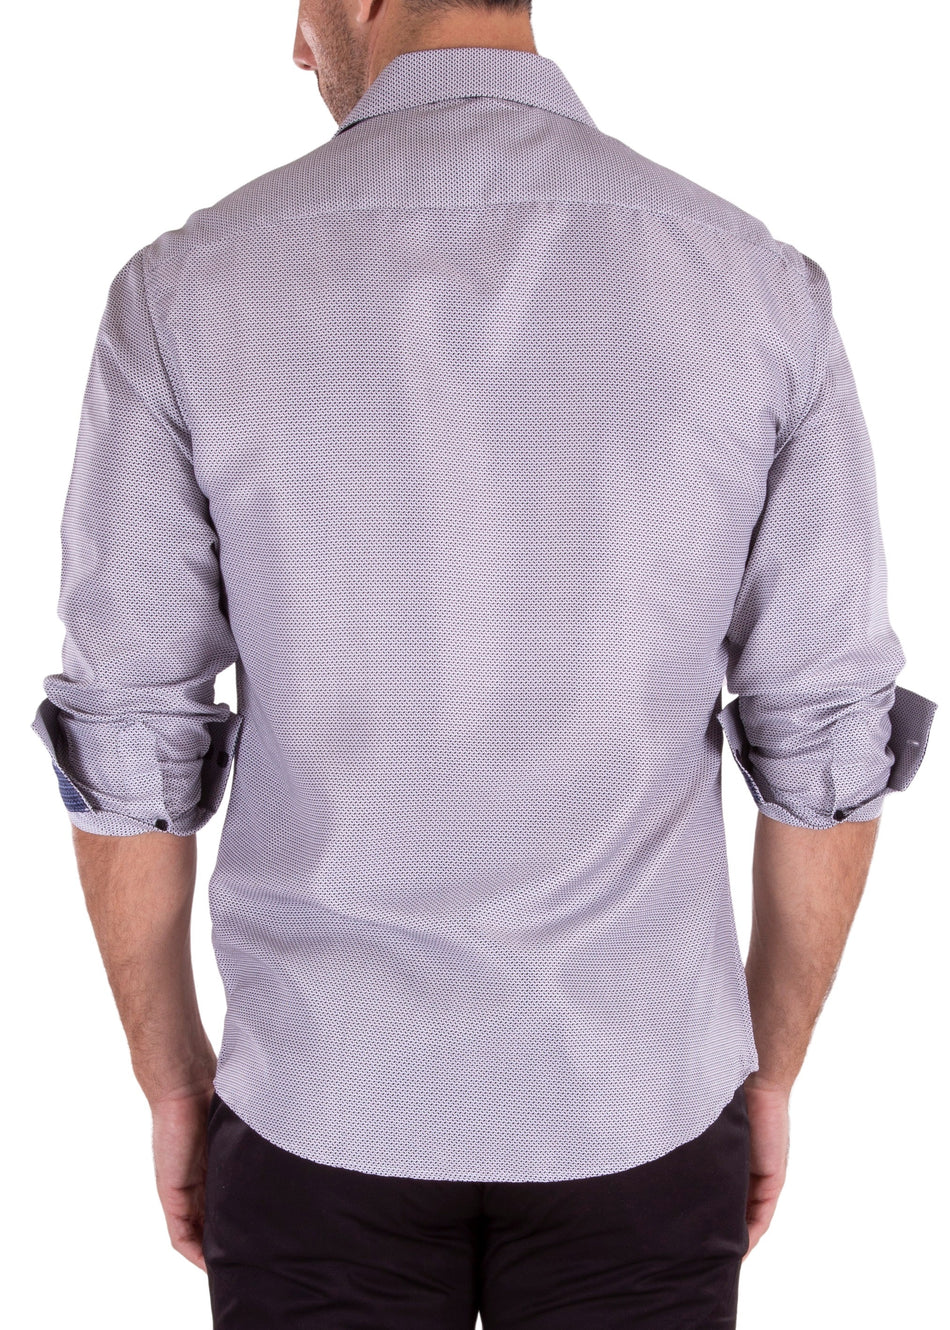 222332 - White Long Sleeve Shirt